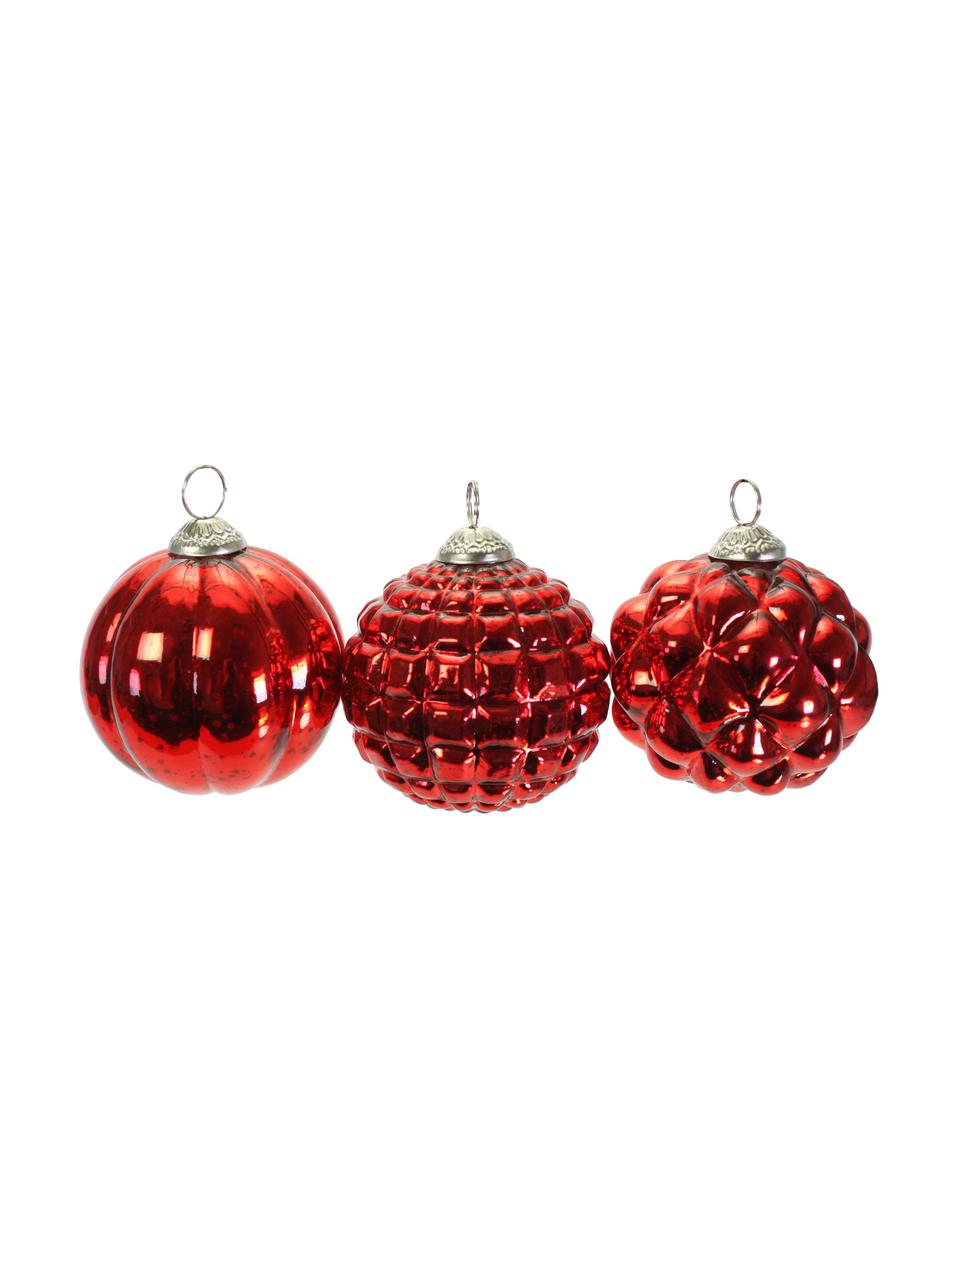 Set de bolas navideñas Red Variety, 3 pzas., Vidrio, pintado, Rojo, Ø 10 cm